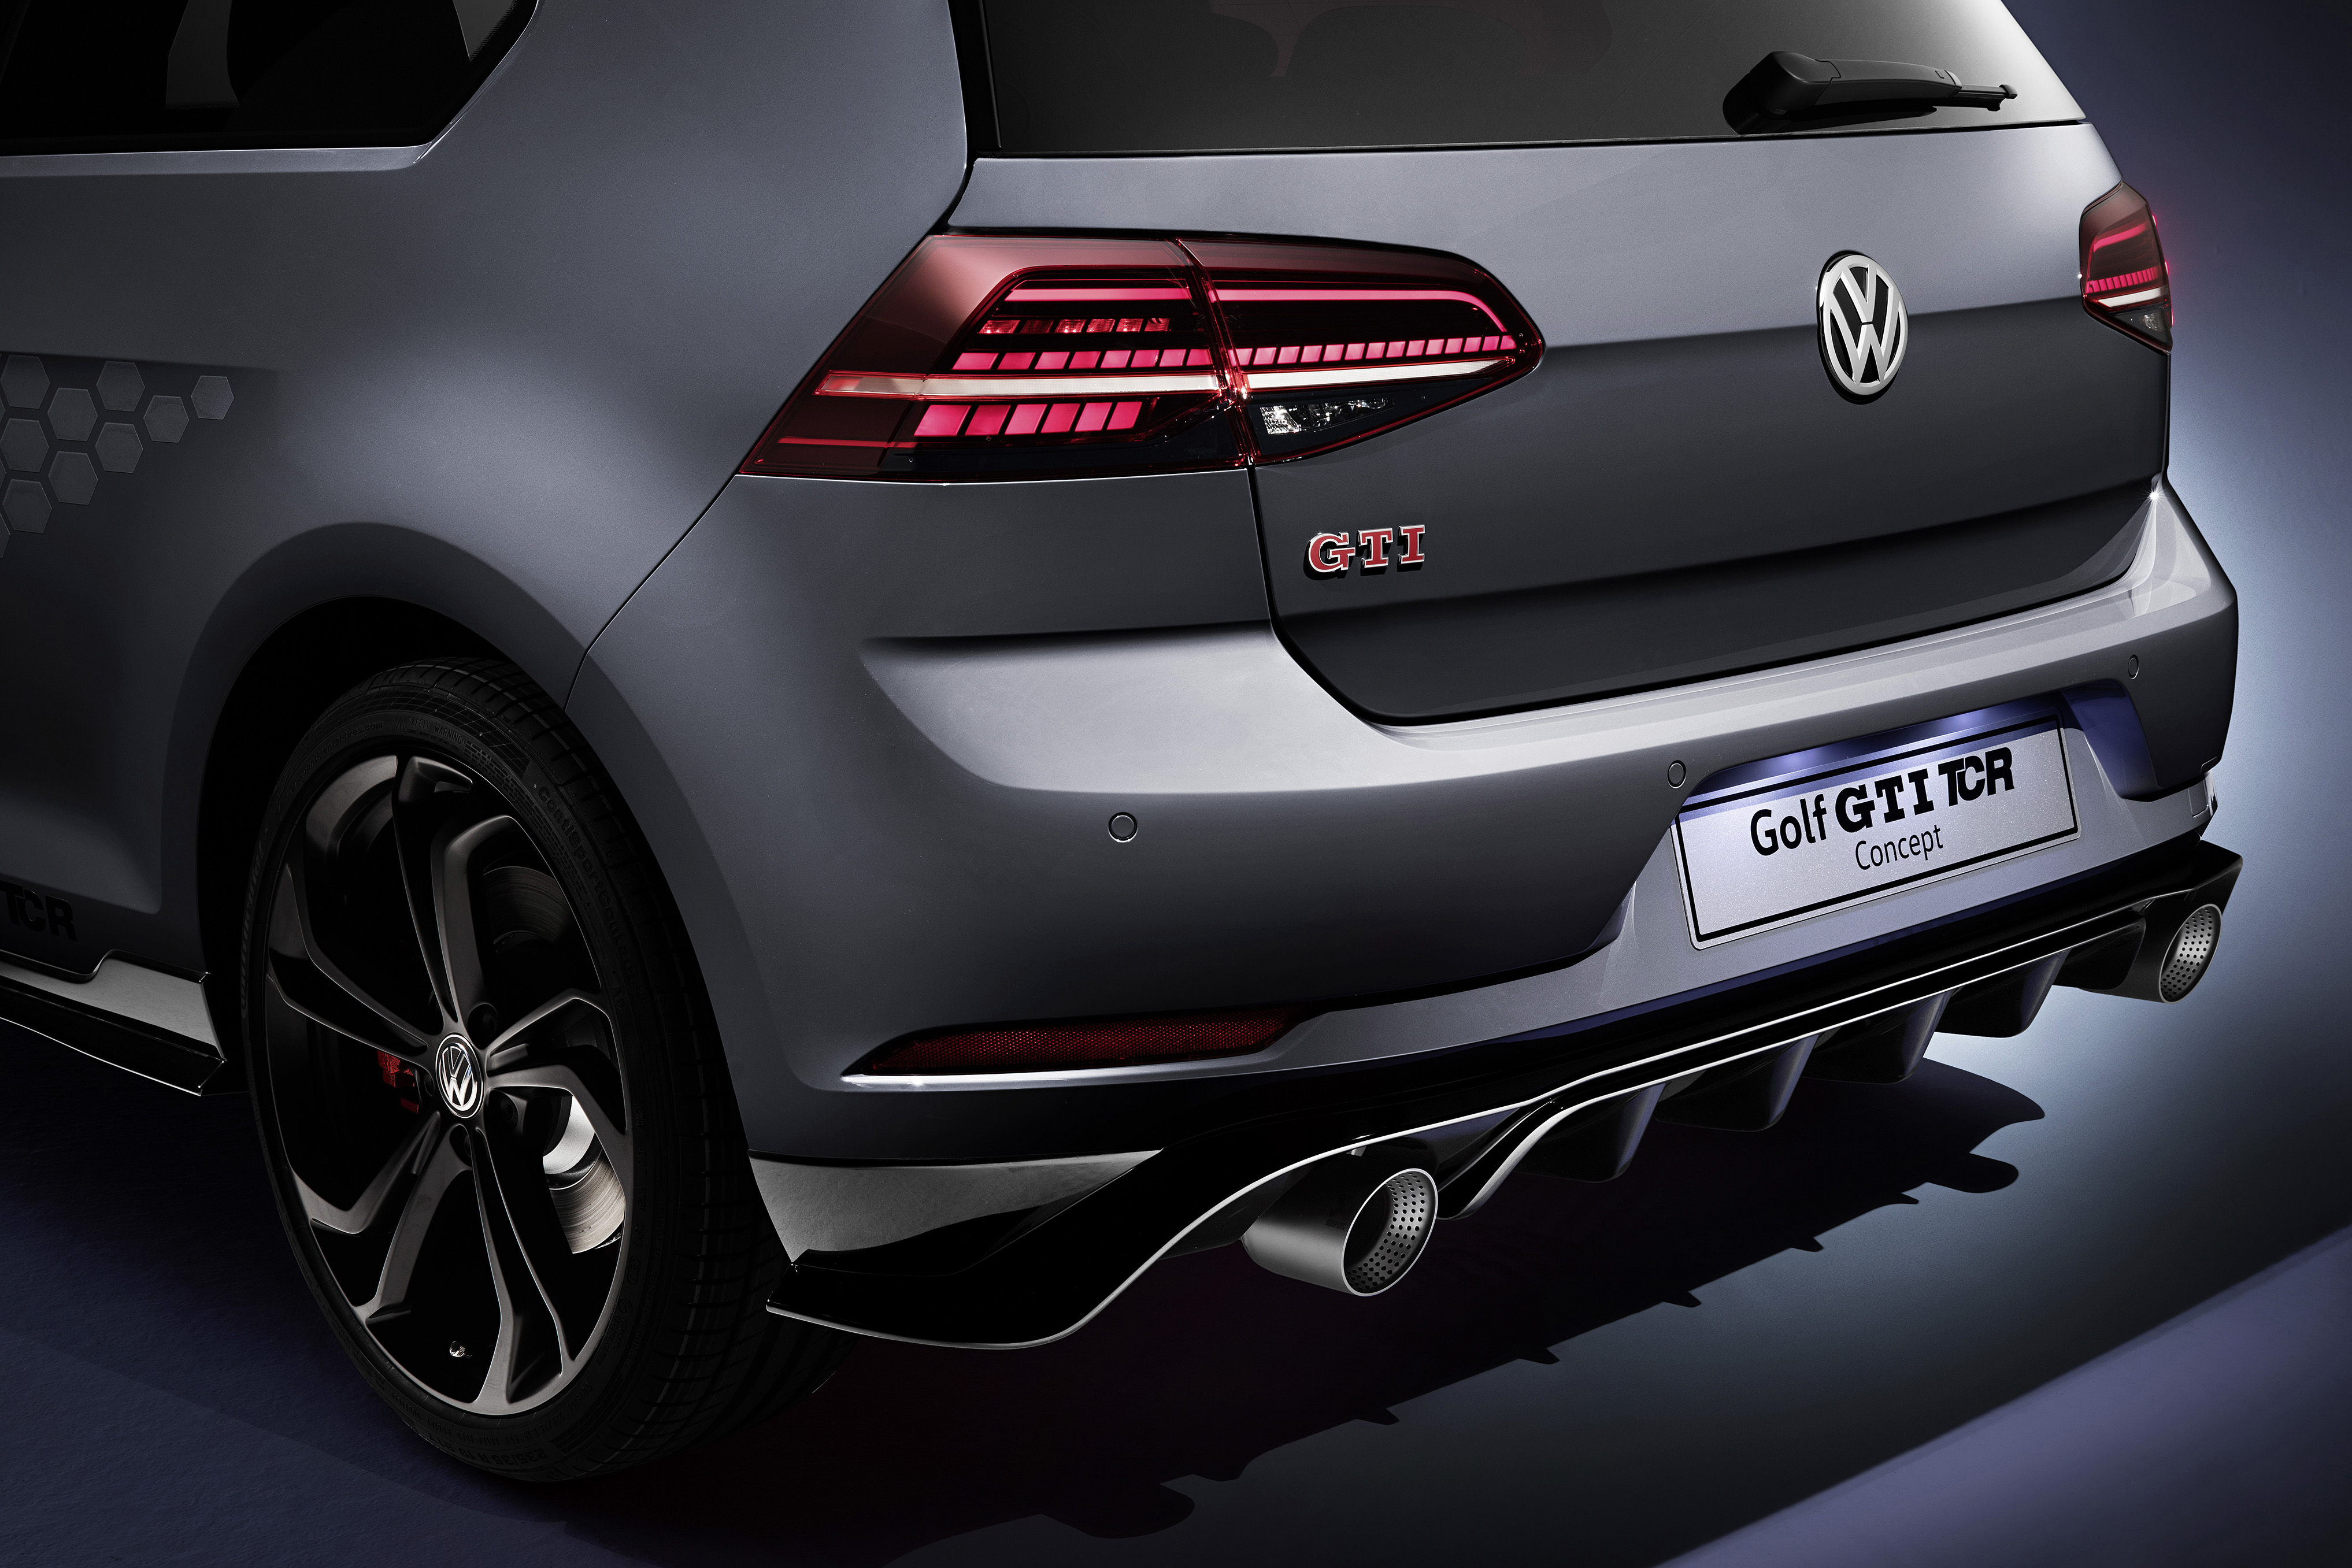 Leed Pest Bel terug 2018 Volkswagen Golf GTI TCR Concept official 9 - Paul Tan's Automotive News